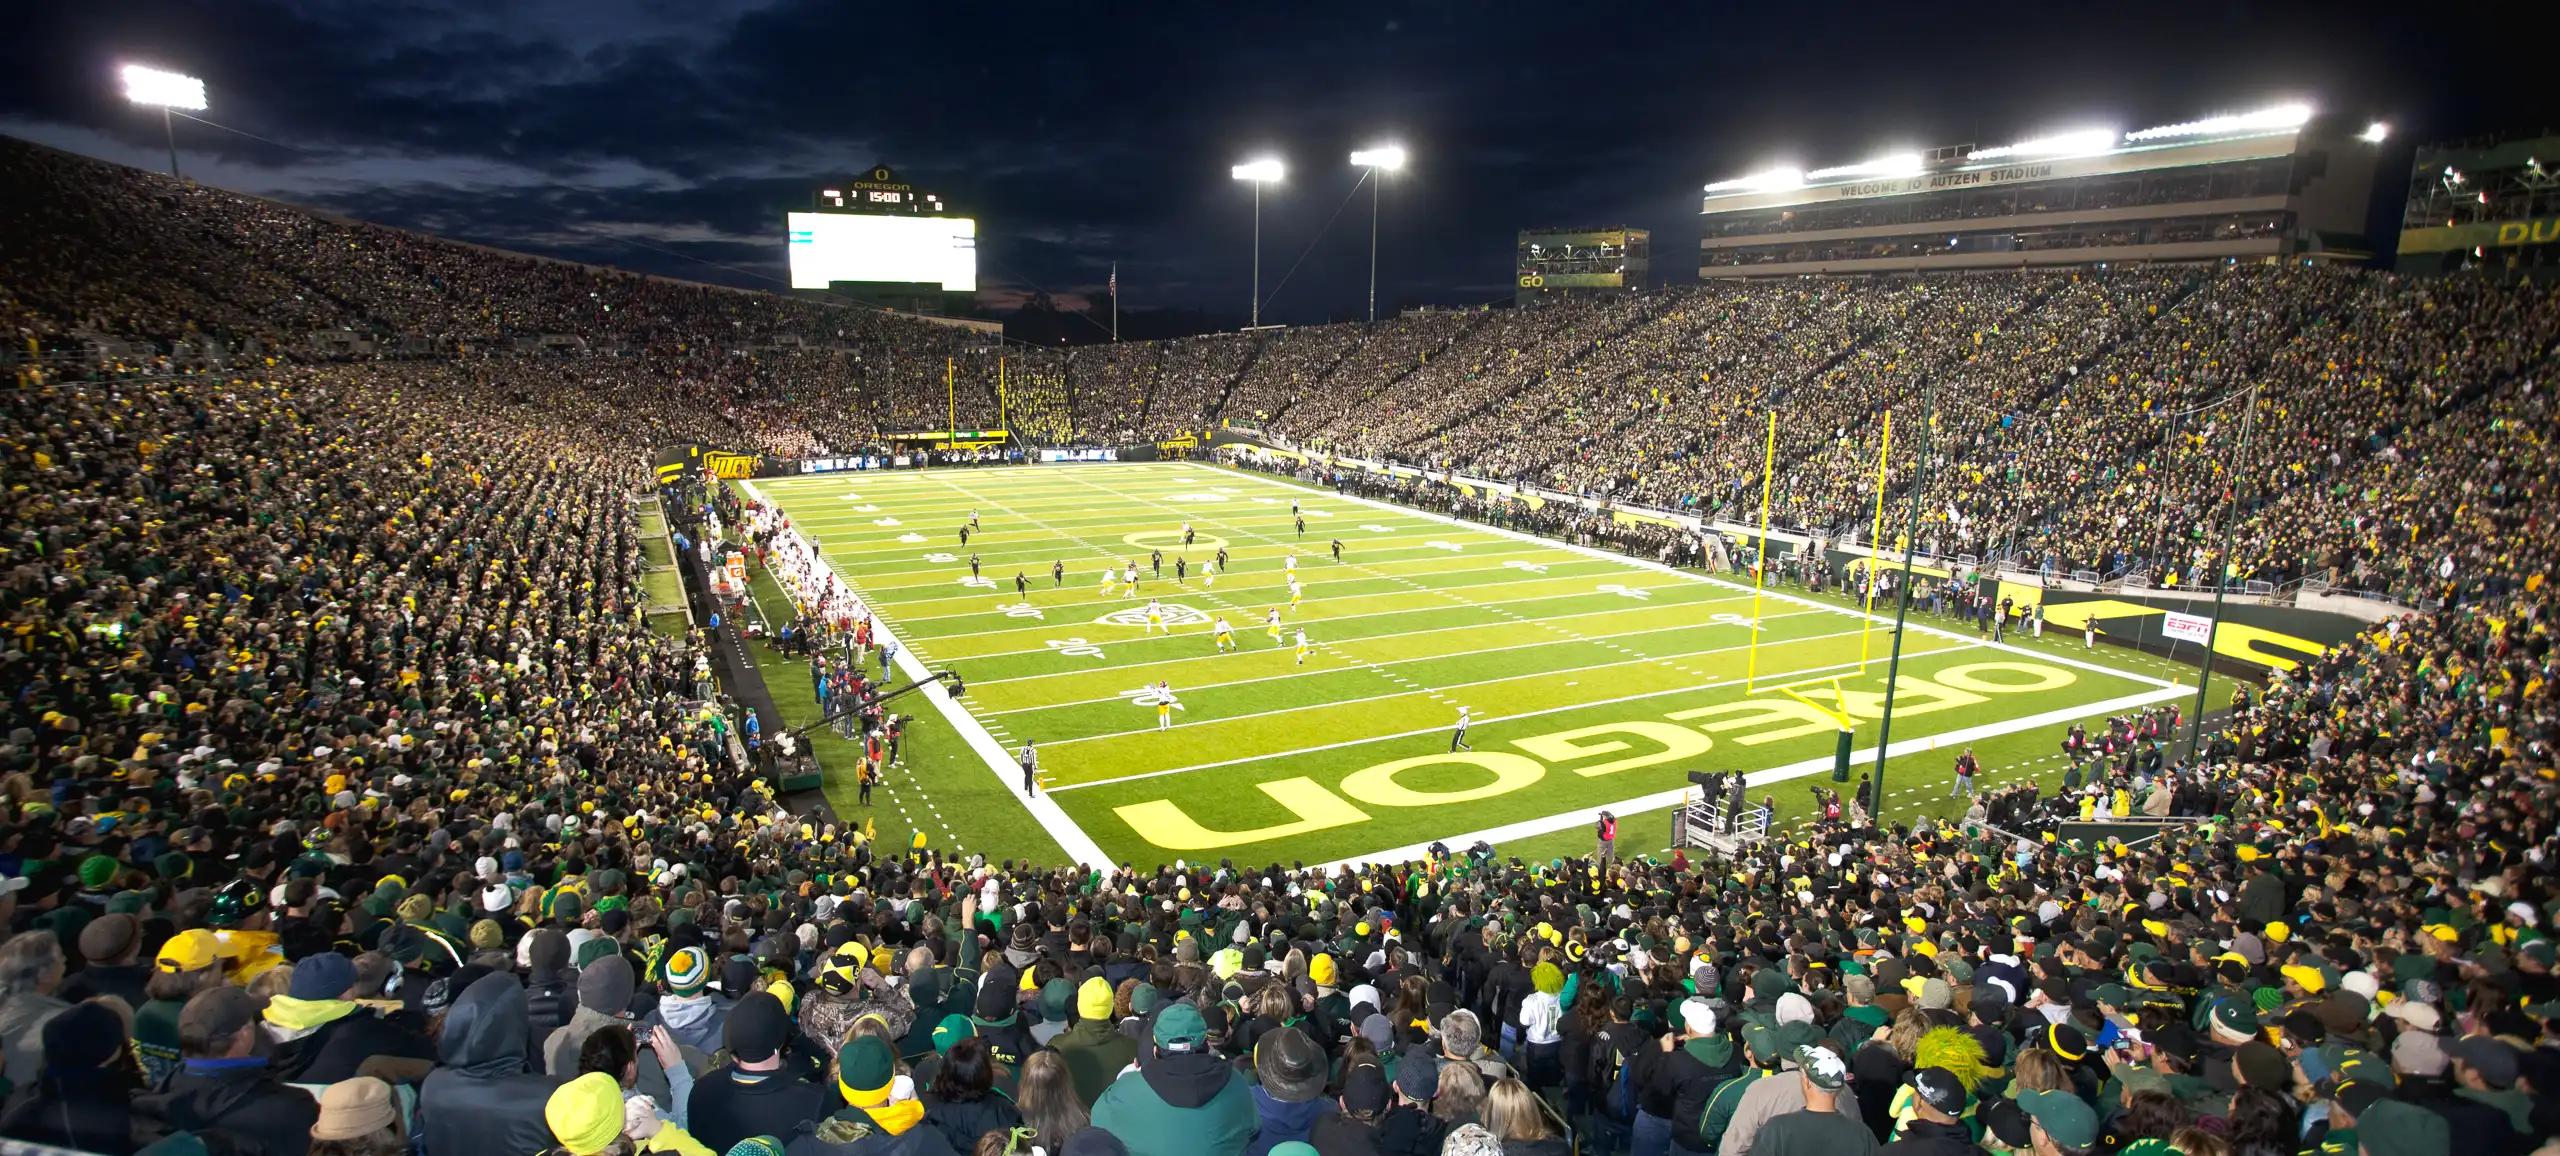 Autzen Stadium during an Oregon-USC football game. Photo by Ray Terrill.